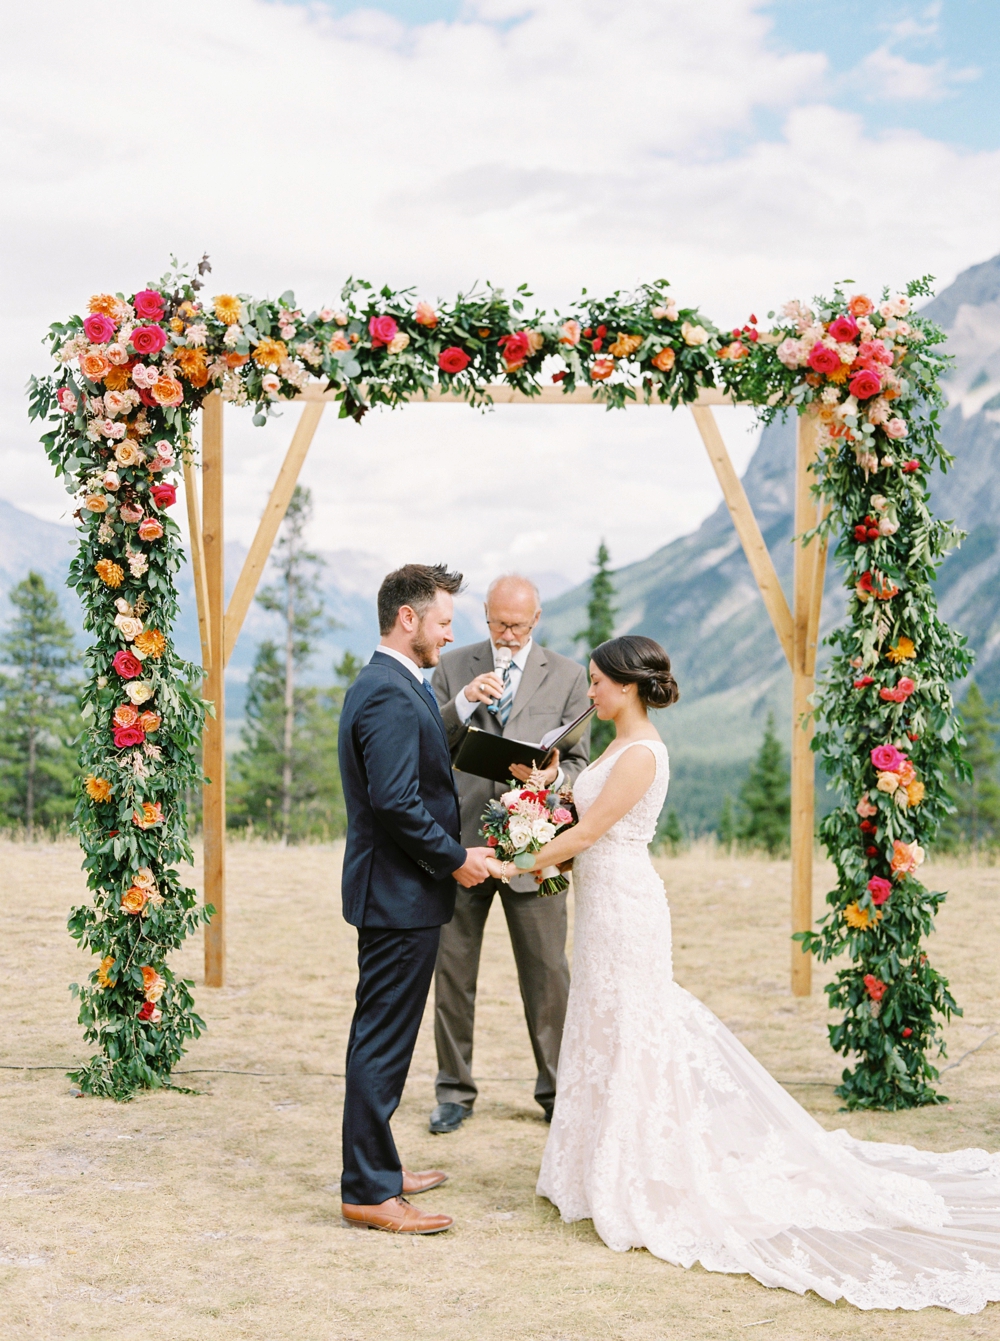 Banff Wedding Photographers | Banff tunnel mountain reservoir | wedding ceremony decor brightly colored floral arch | Justine Milton fine art film photographers